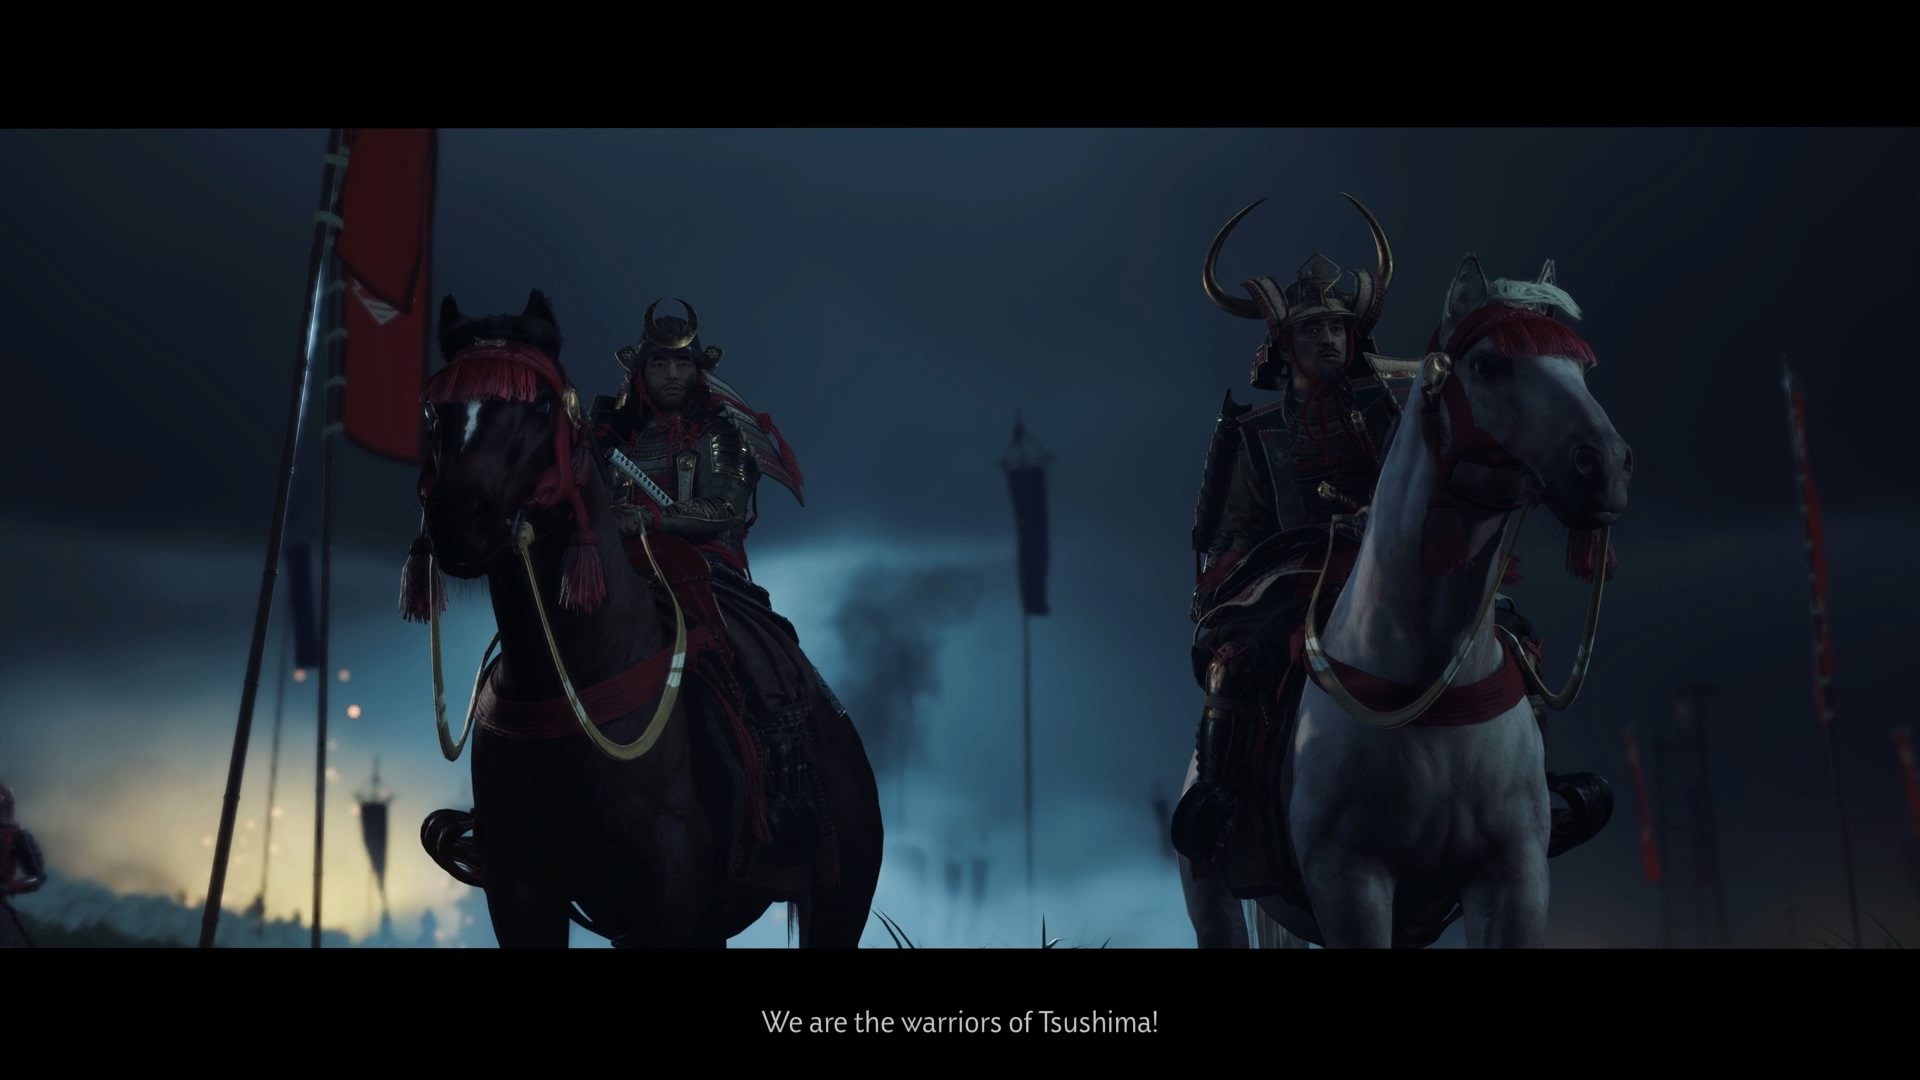 Ghost of Tsushima Open World Samurai Video Game Review